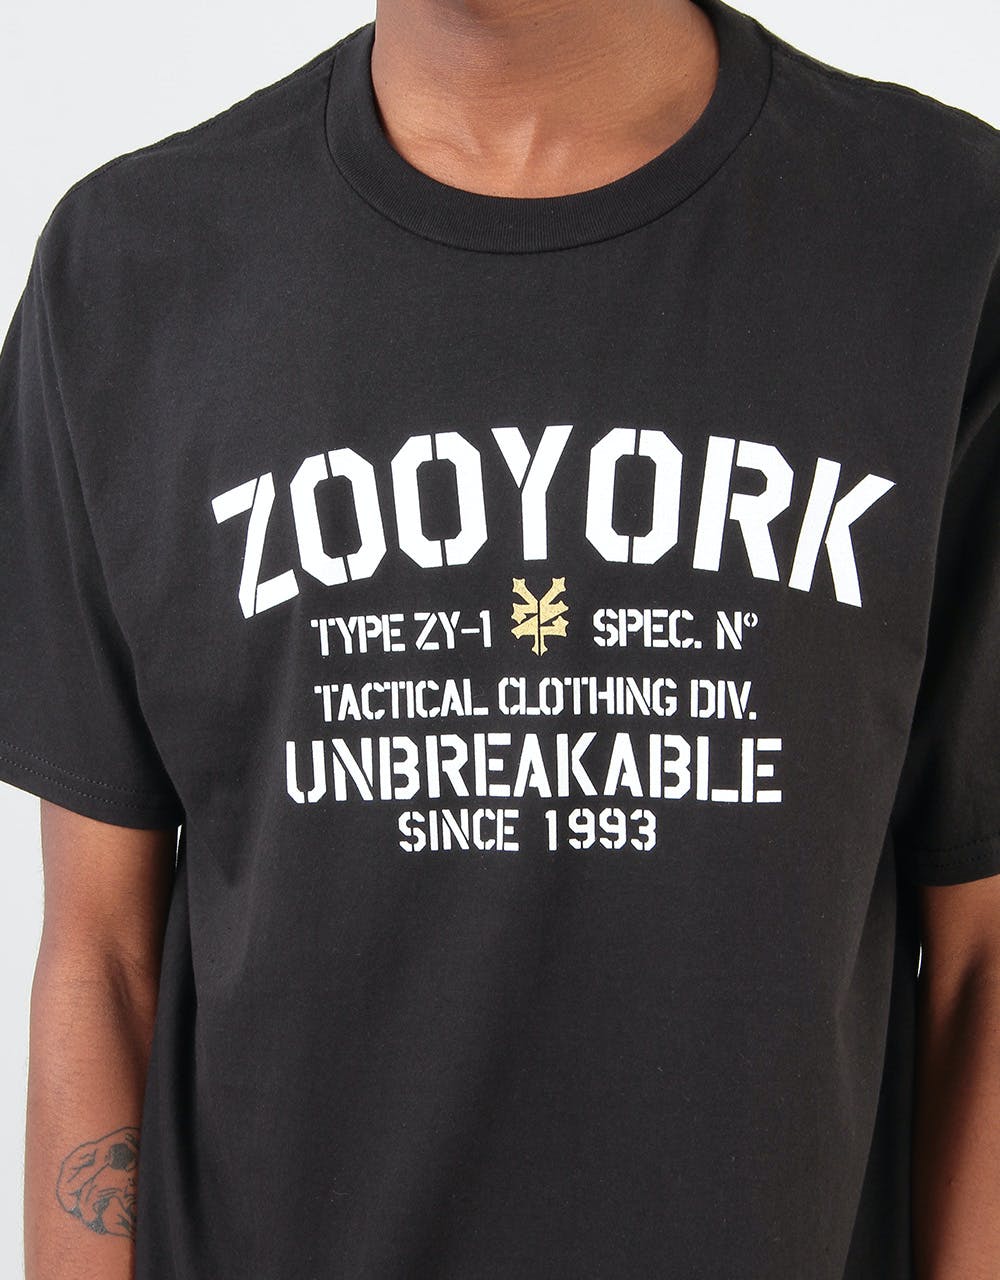 Zoo York Tactical T-Shirt - Black